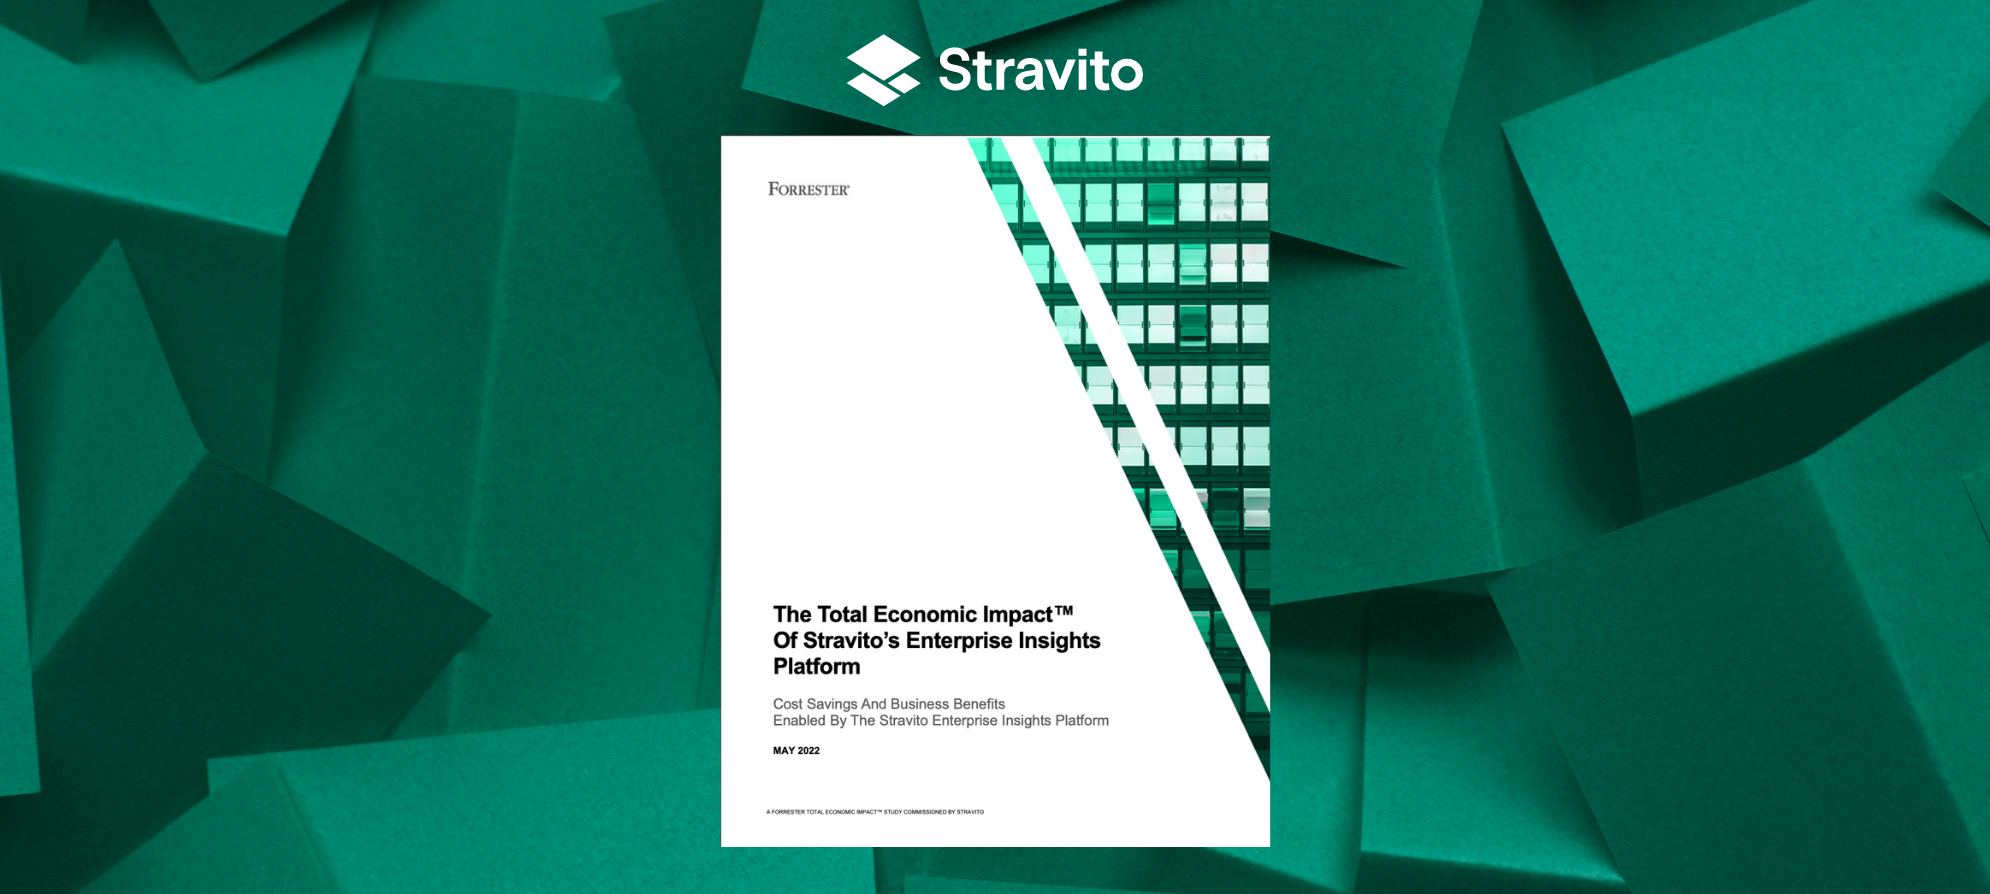 The Total Economic Impact of Stravito's Enterprise Insights Platform